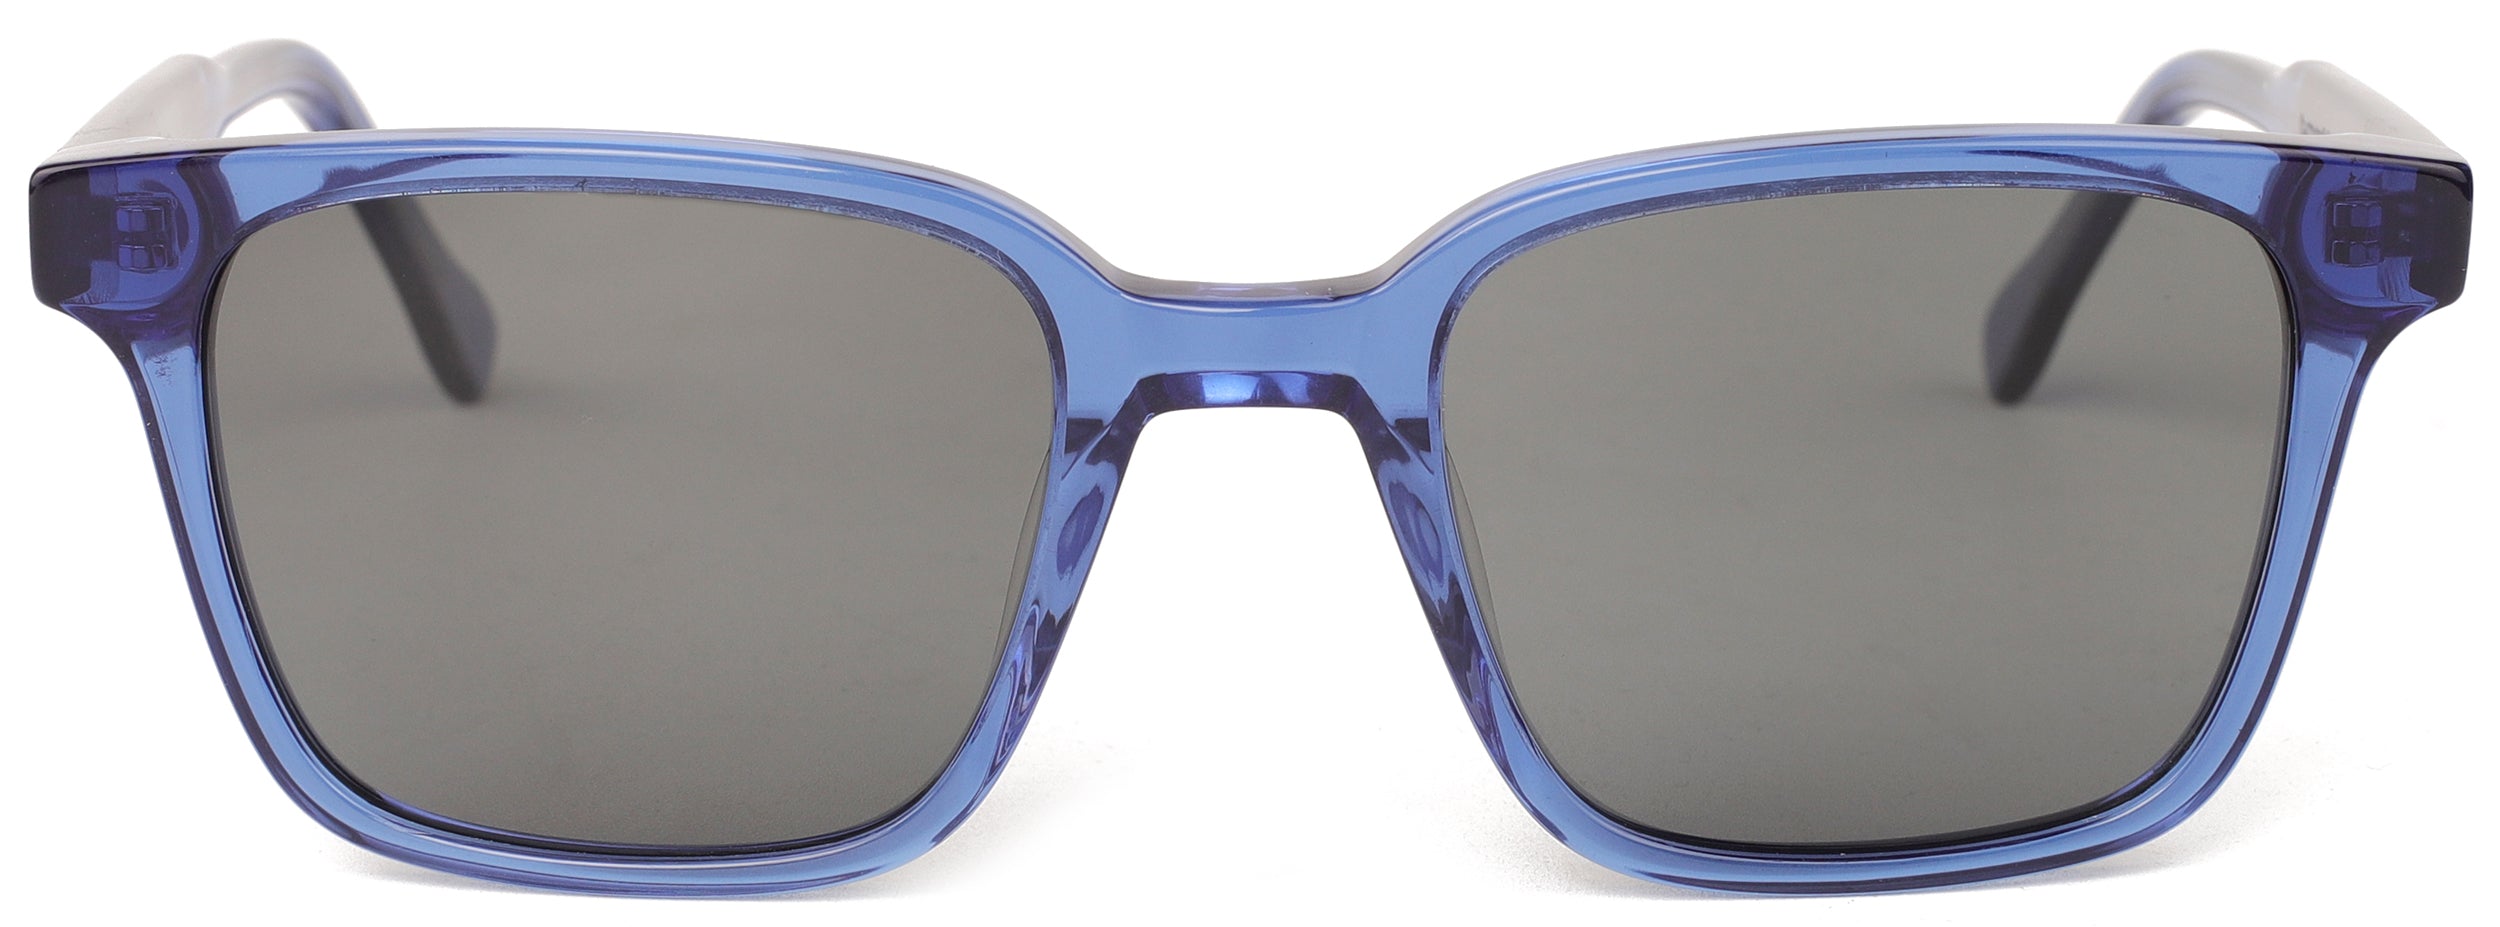 Bradshaw Sunglasses